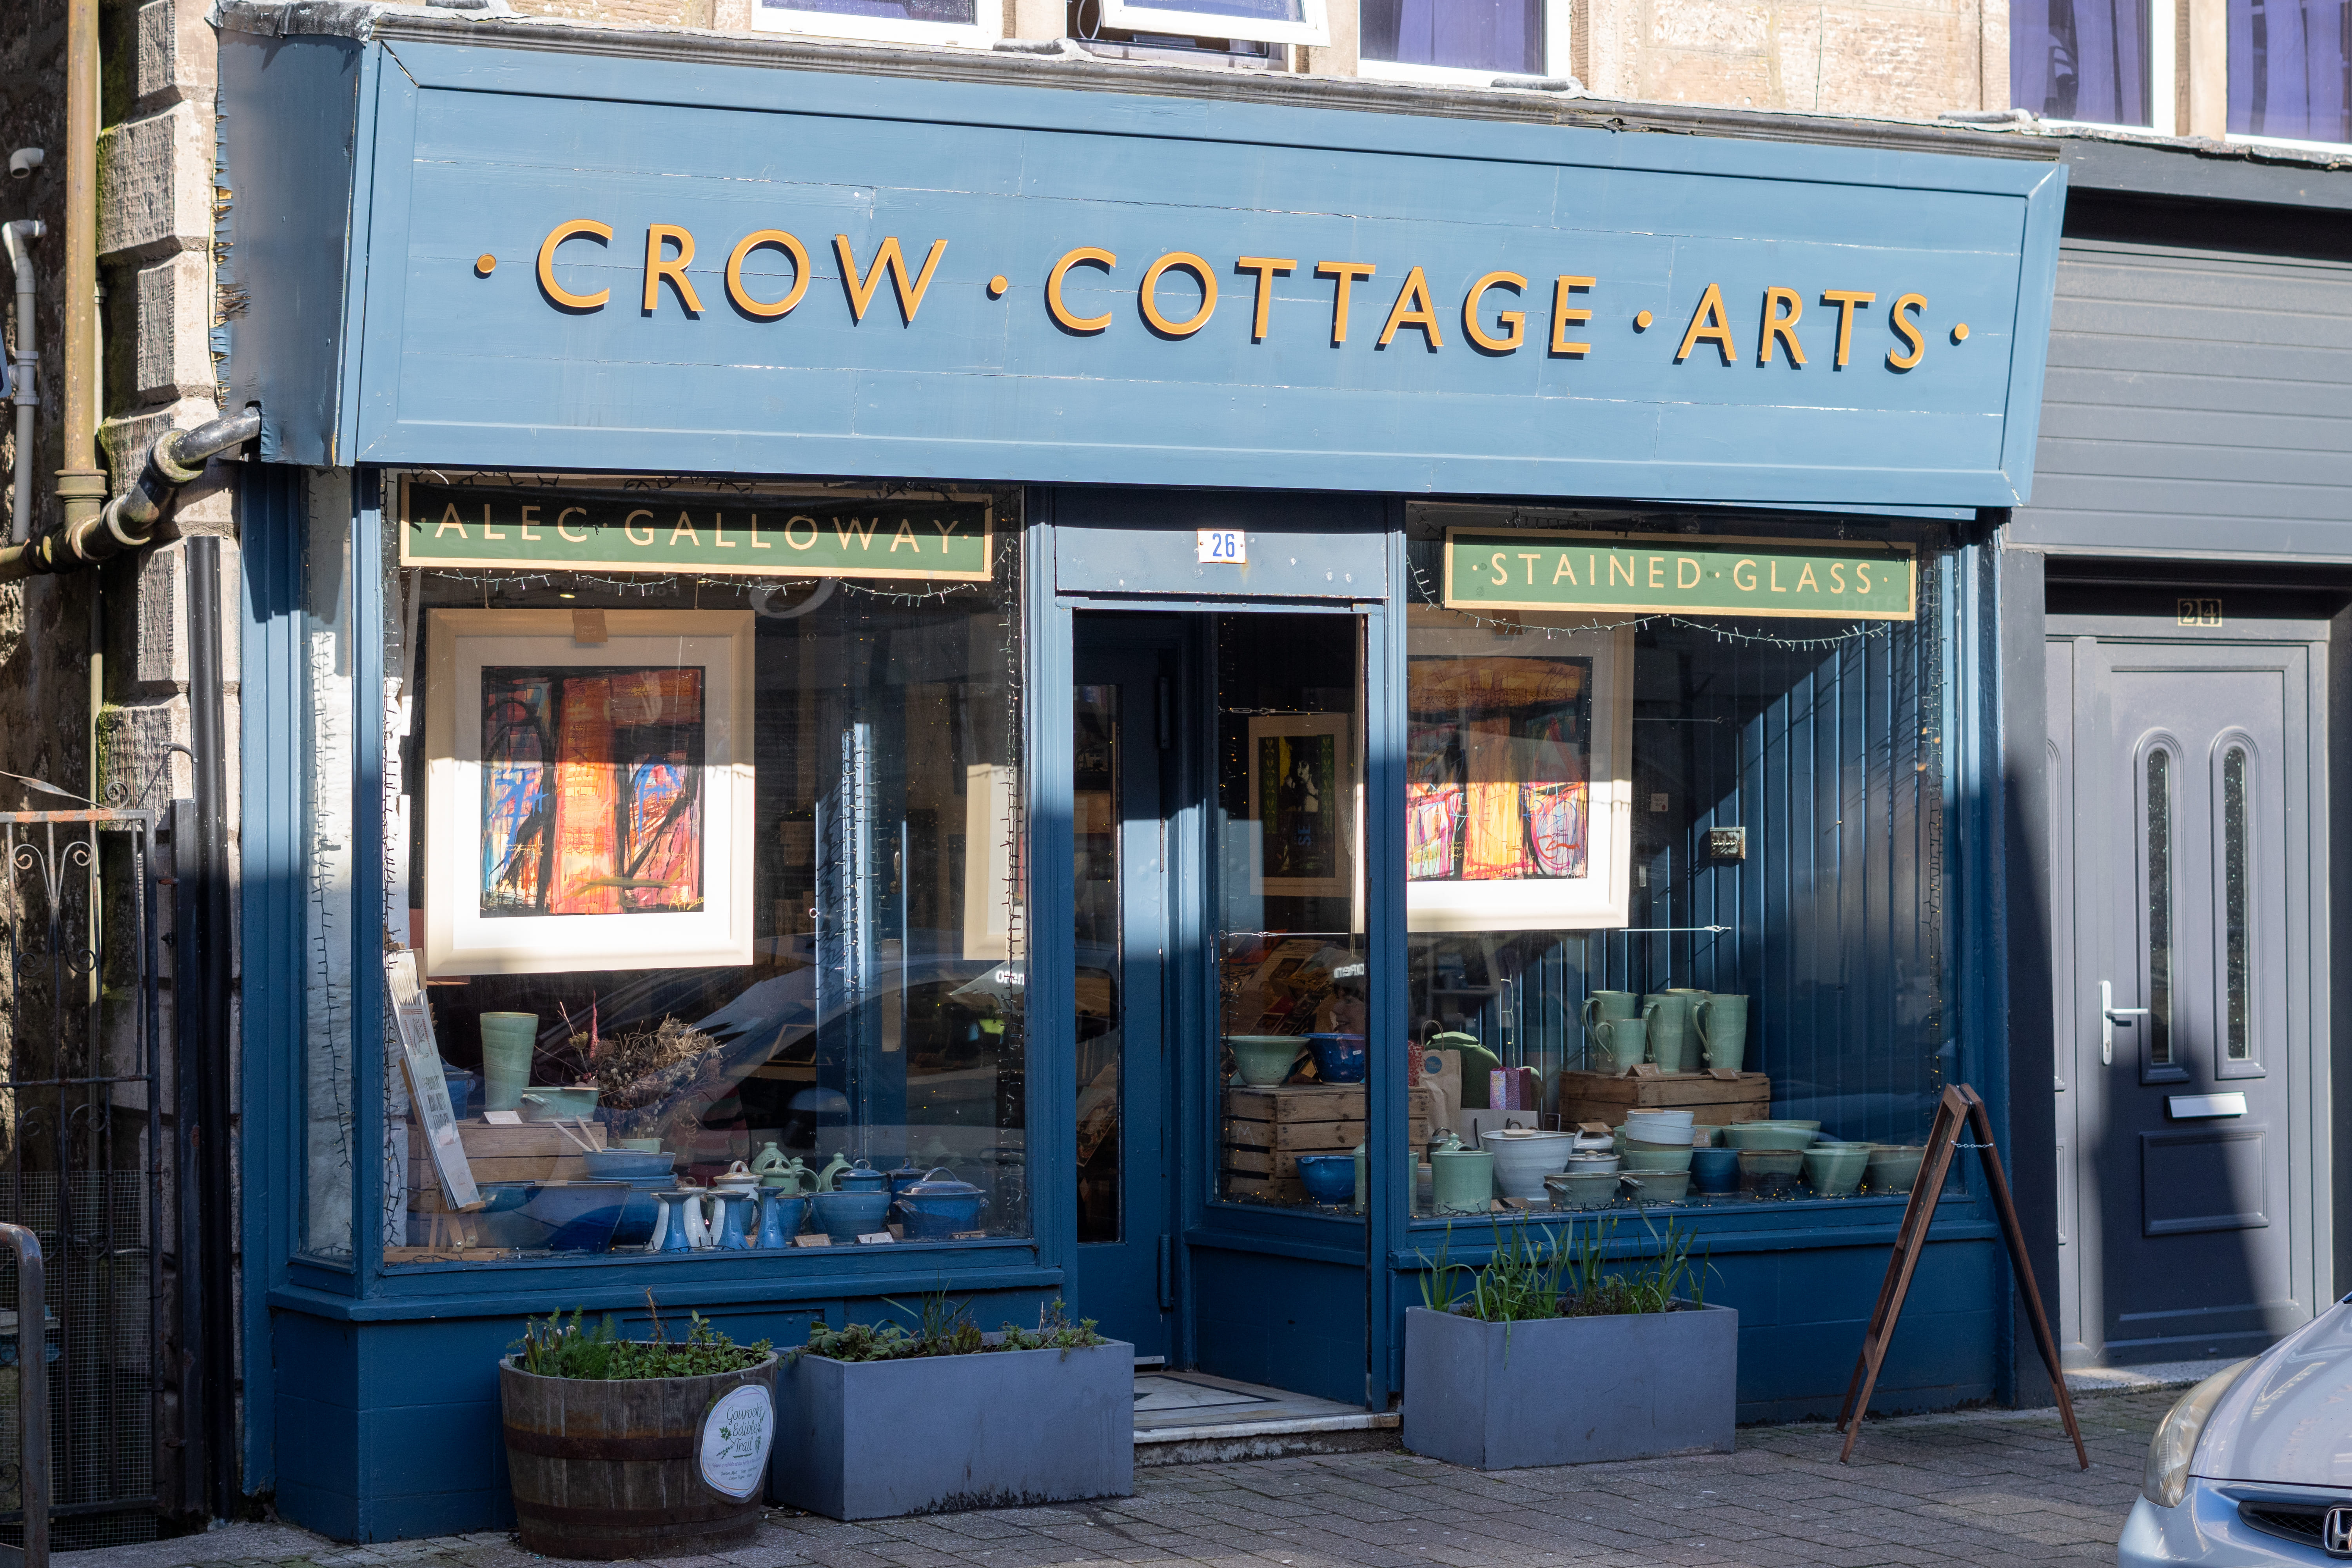 Image of Crow Cottage Arts shop front